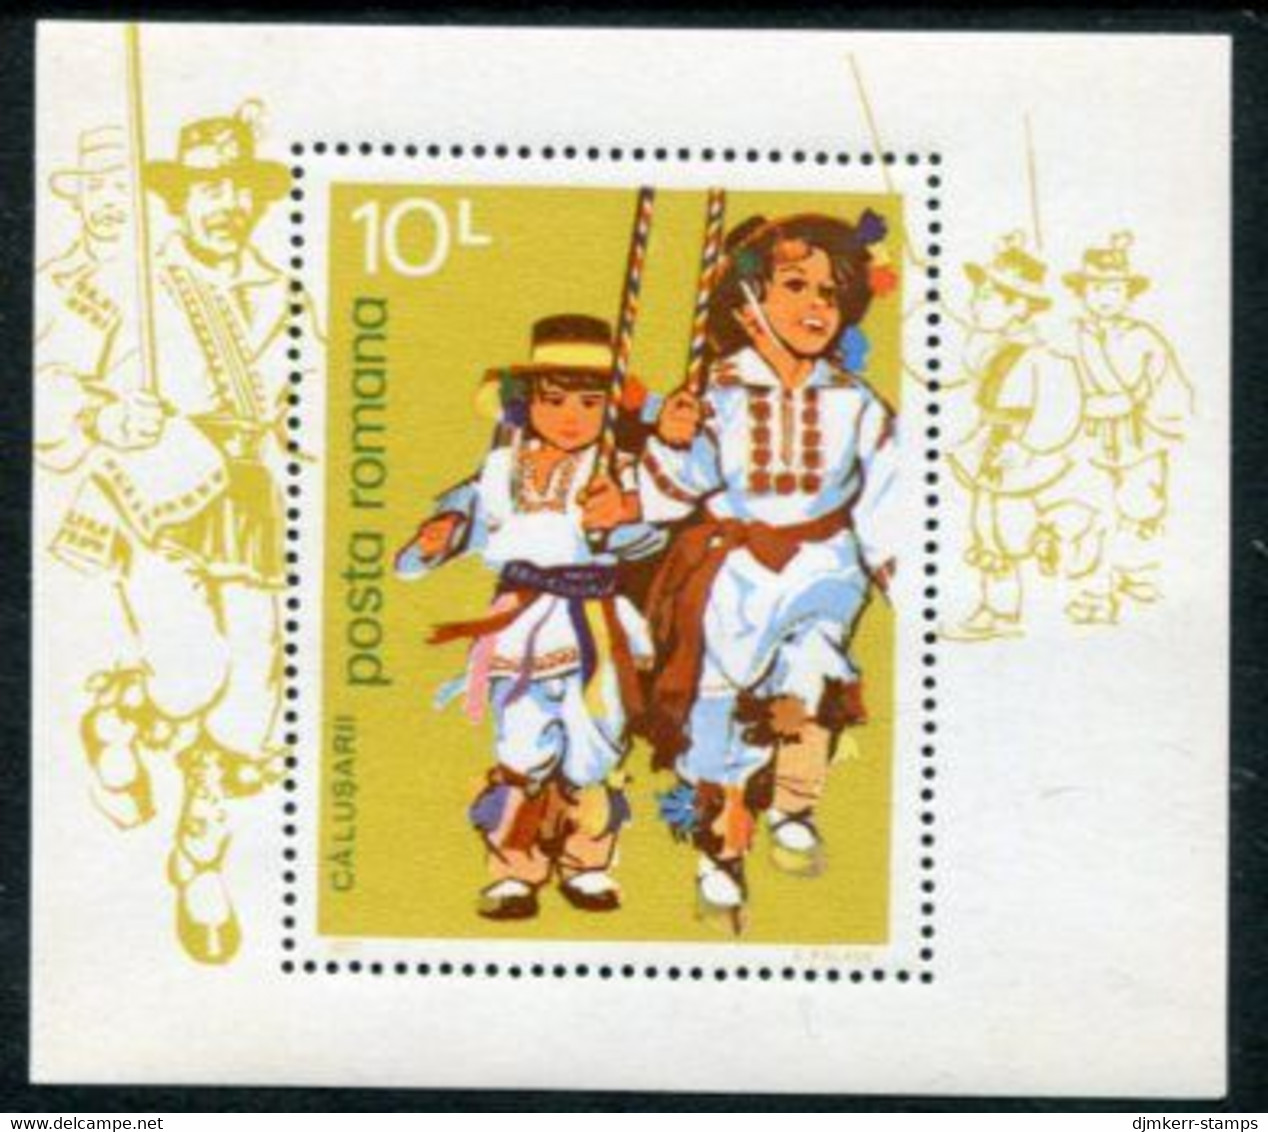 ROMANIA 1977 Folk Dances Block MNH / **  Michel Block 145 - Unused Stamps